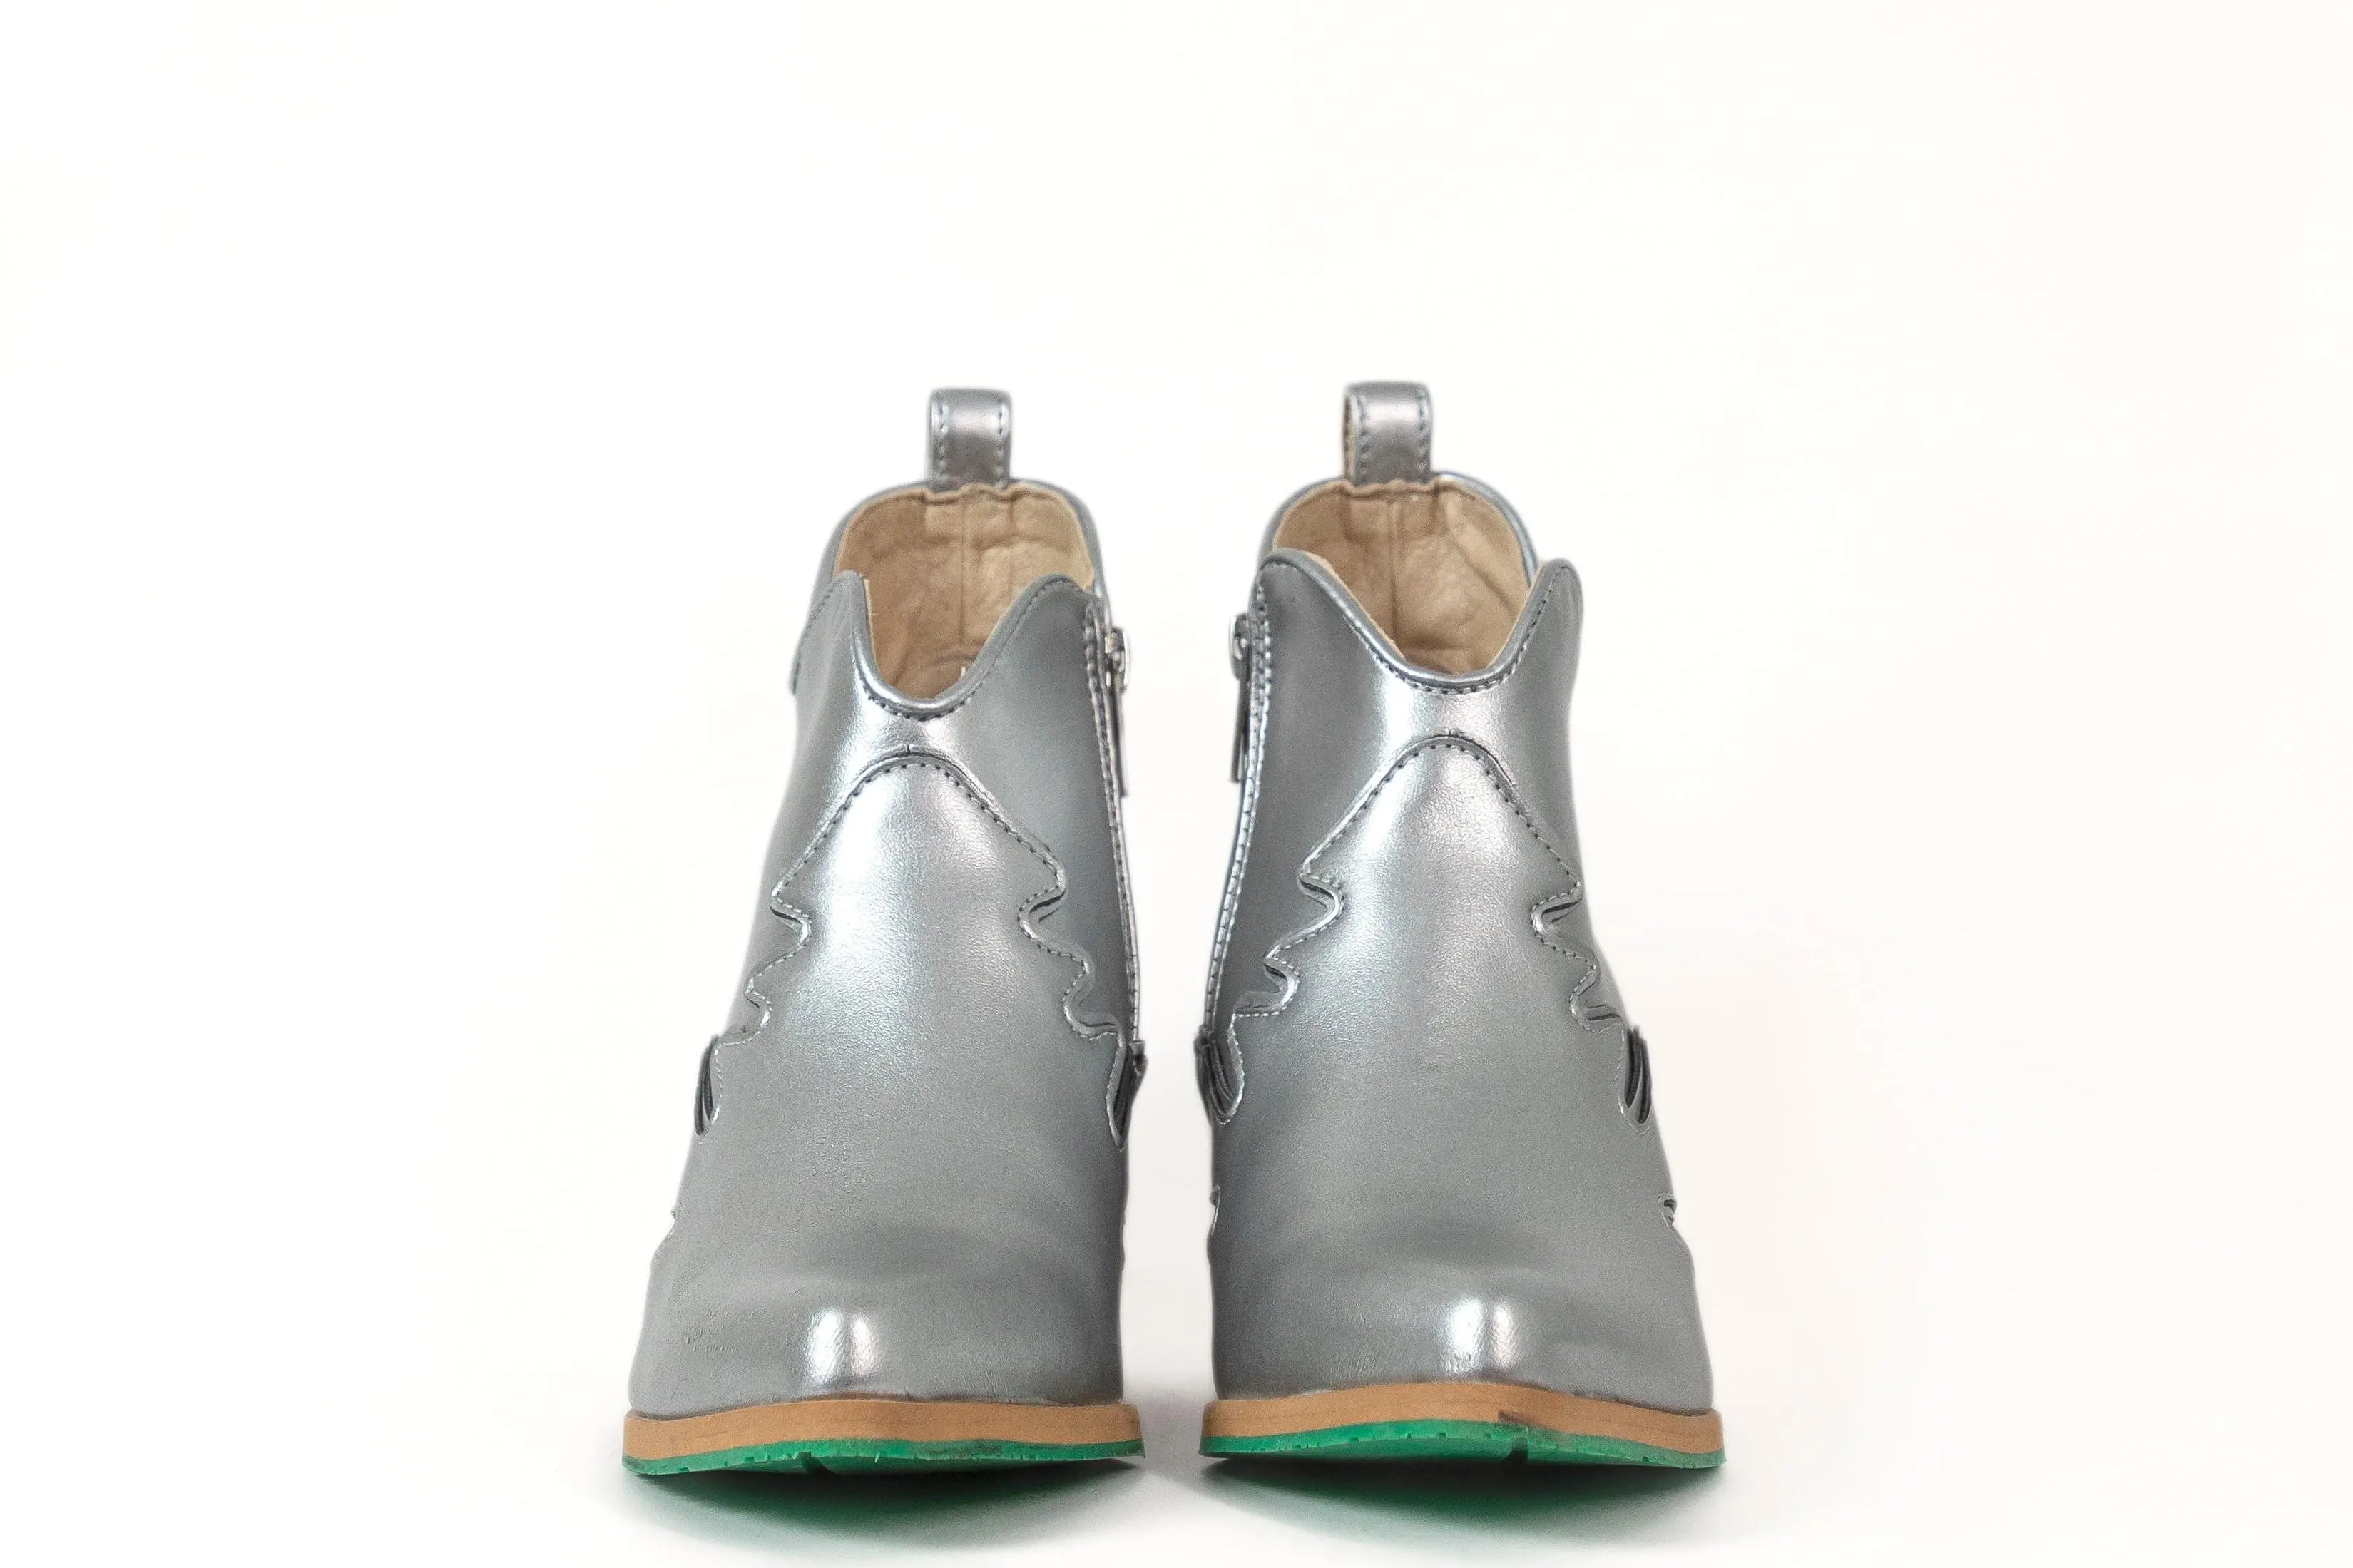 Atlantis Vegan Ankle Boots Silver - Limited Edition aperfectjane